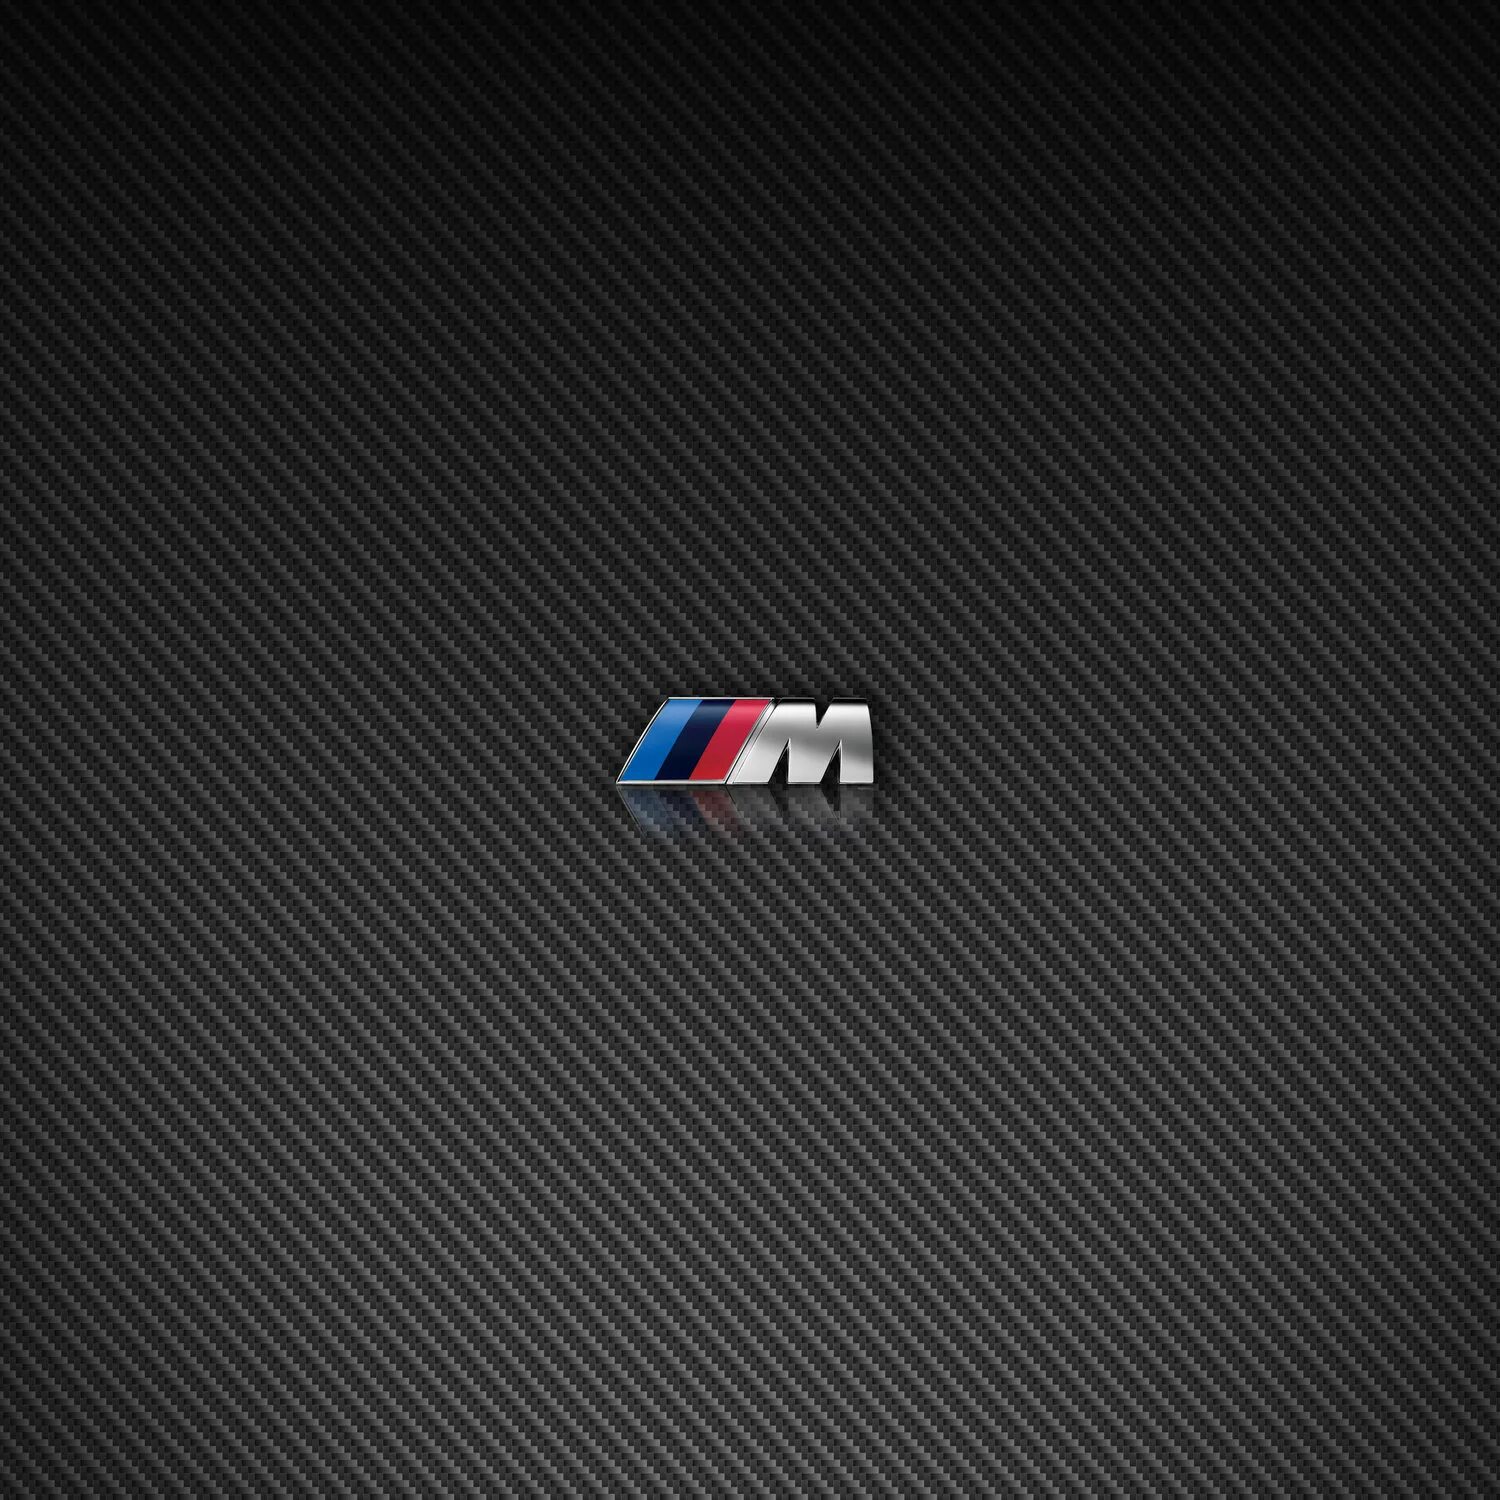 Bmw m power. БМВ карбон на айфон. BMW M logo Carbon. BMW m4 Power.